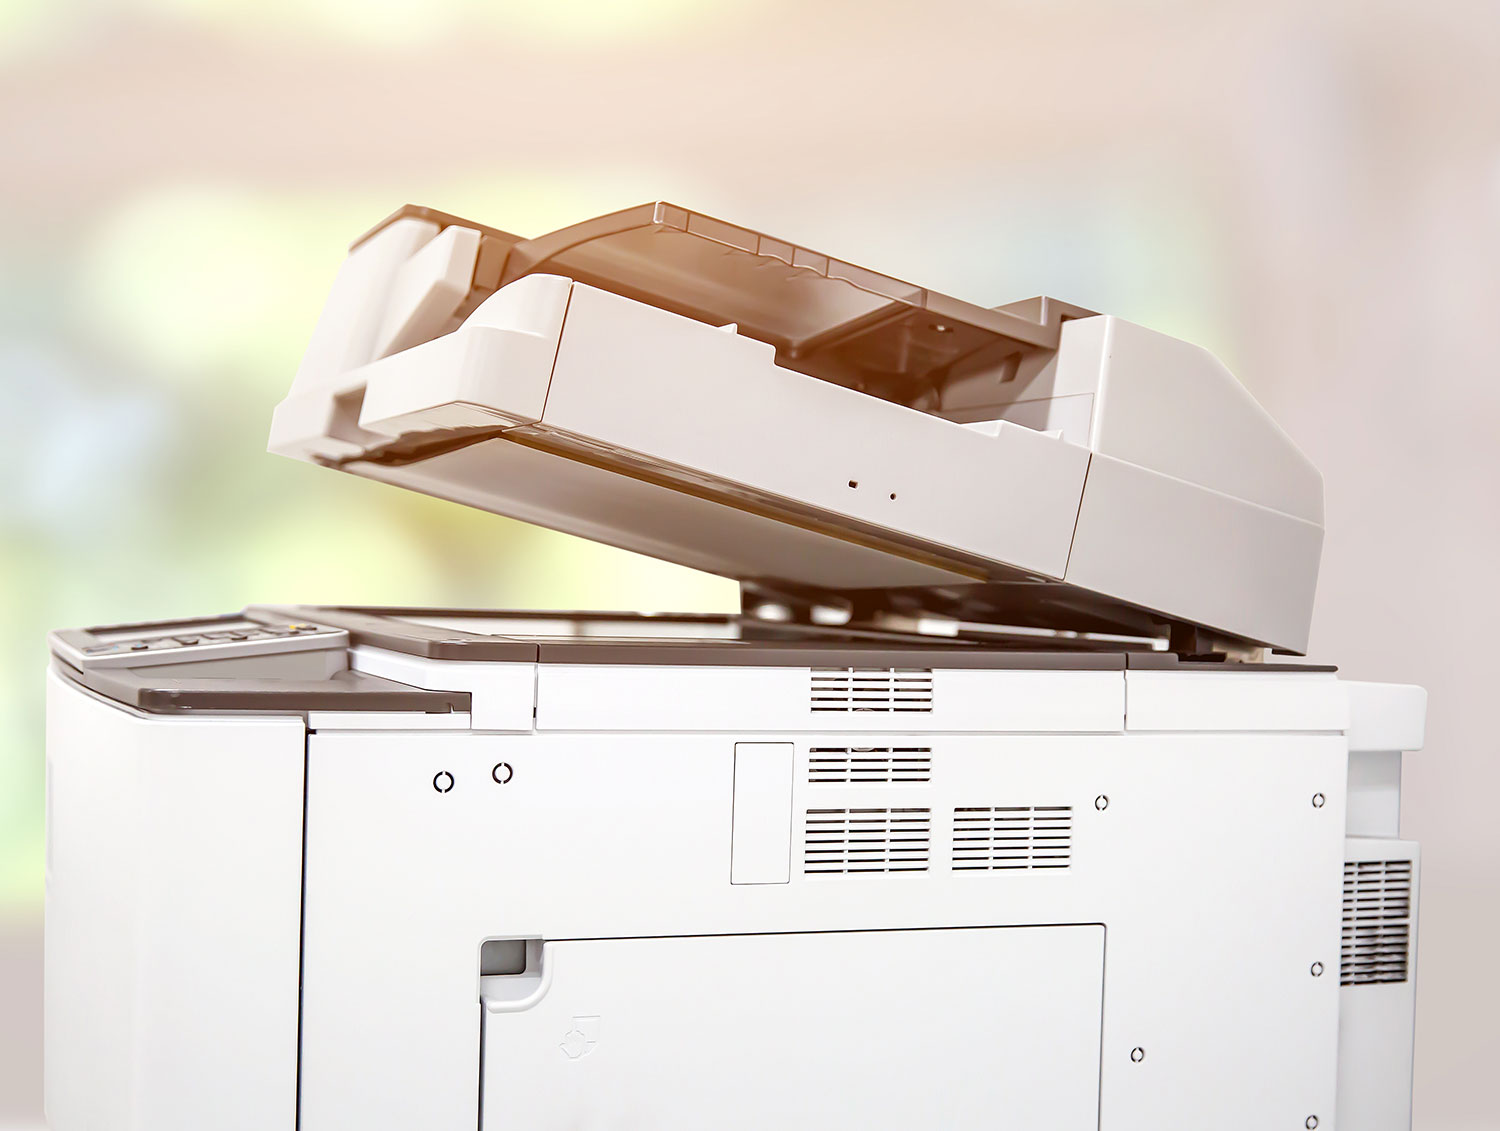 VICO moorsele wevelgem digitale drukkerij en copycenter